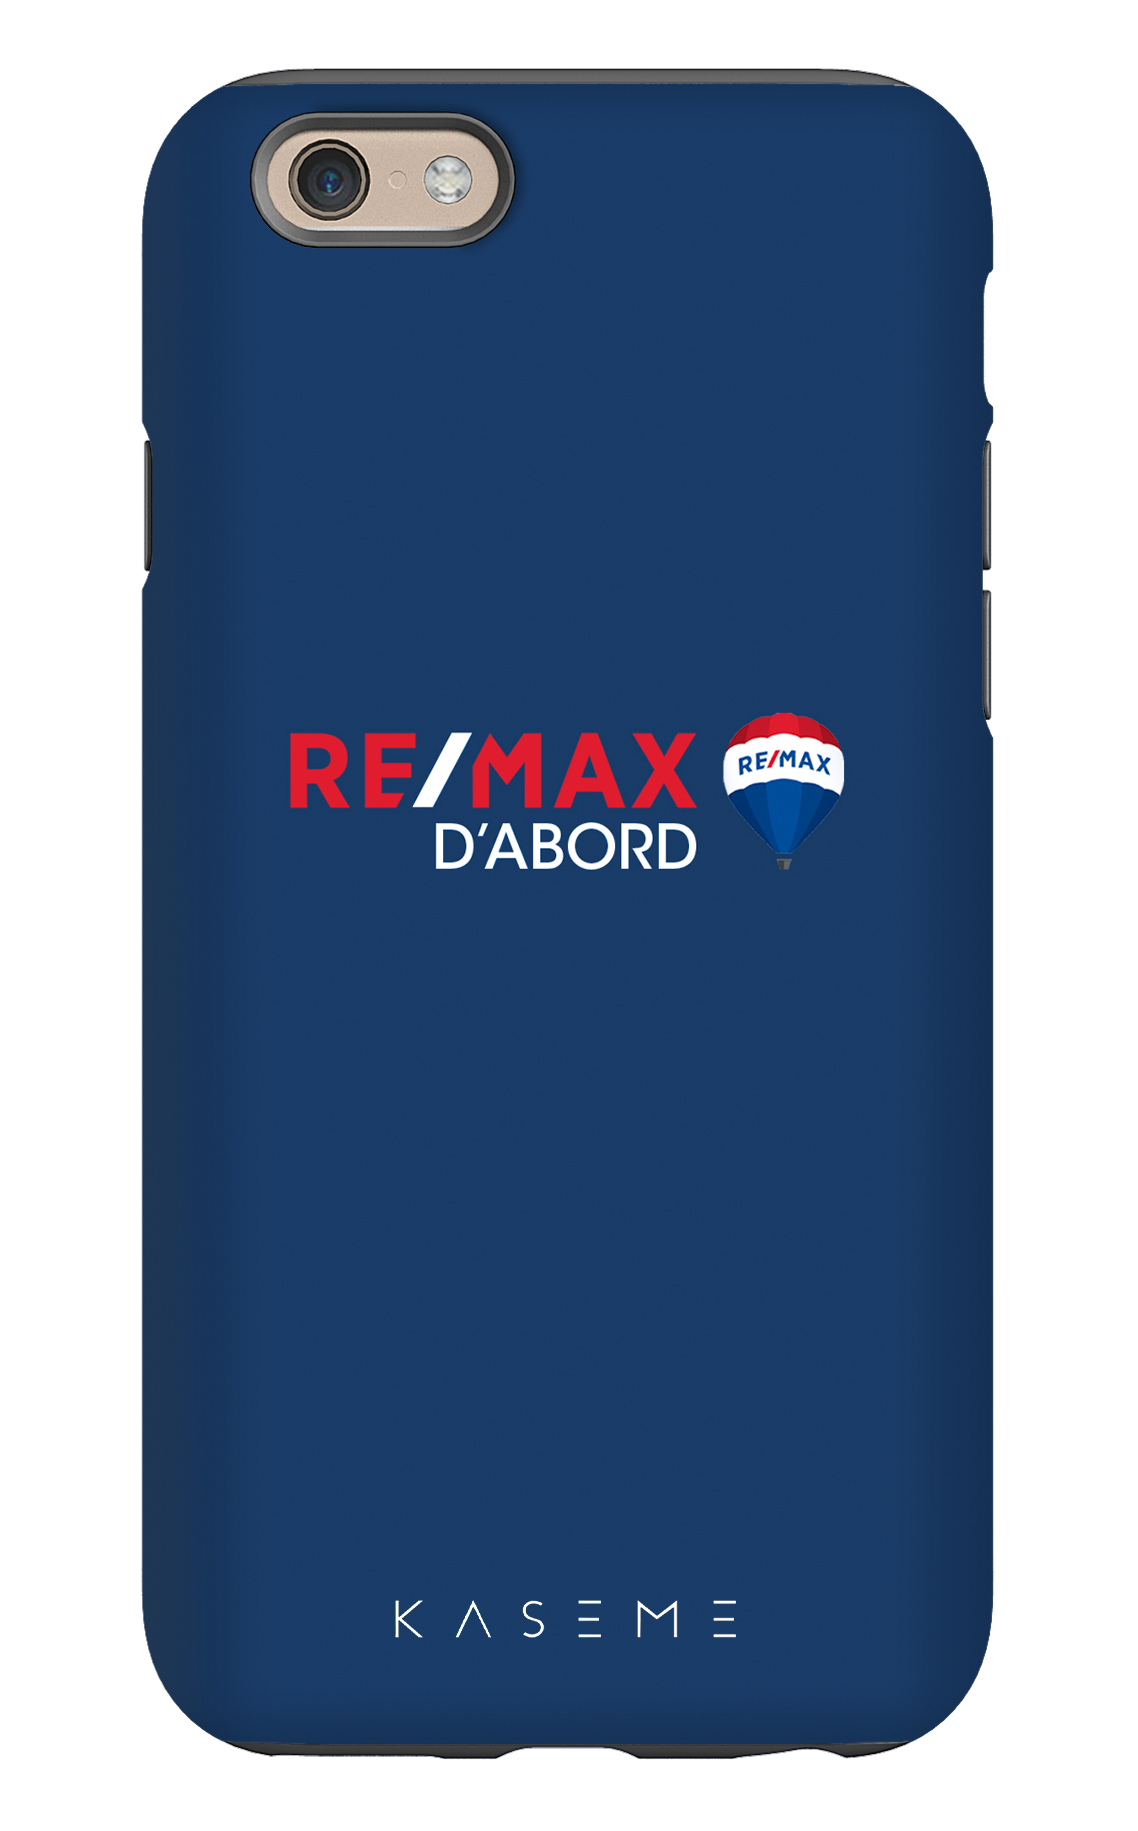 Remax D'abord Bleu - iPhone 6/6s